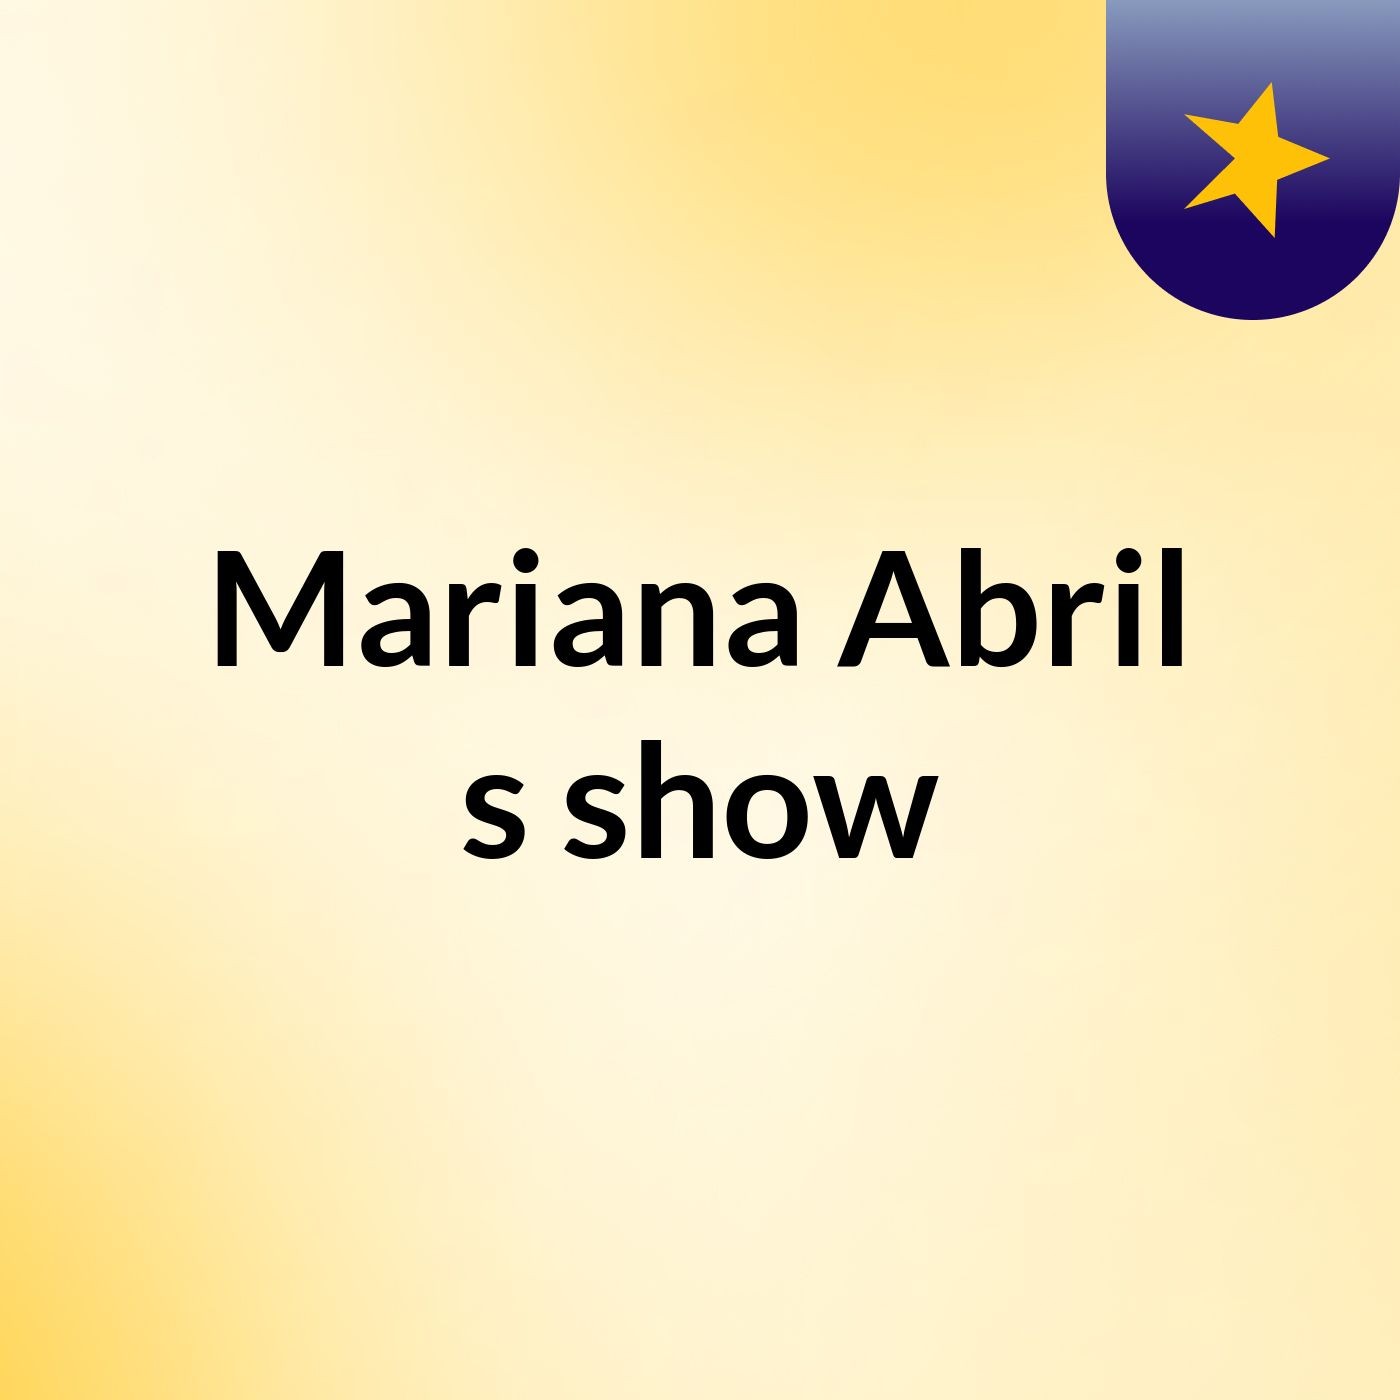 Mariana Abril's show